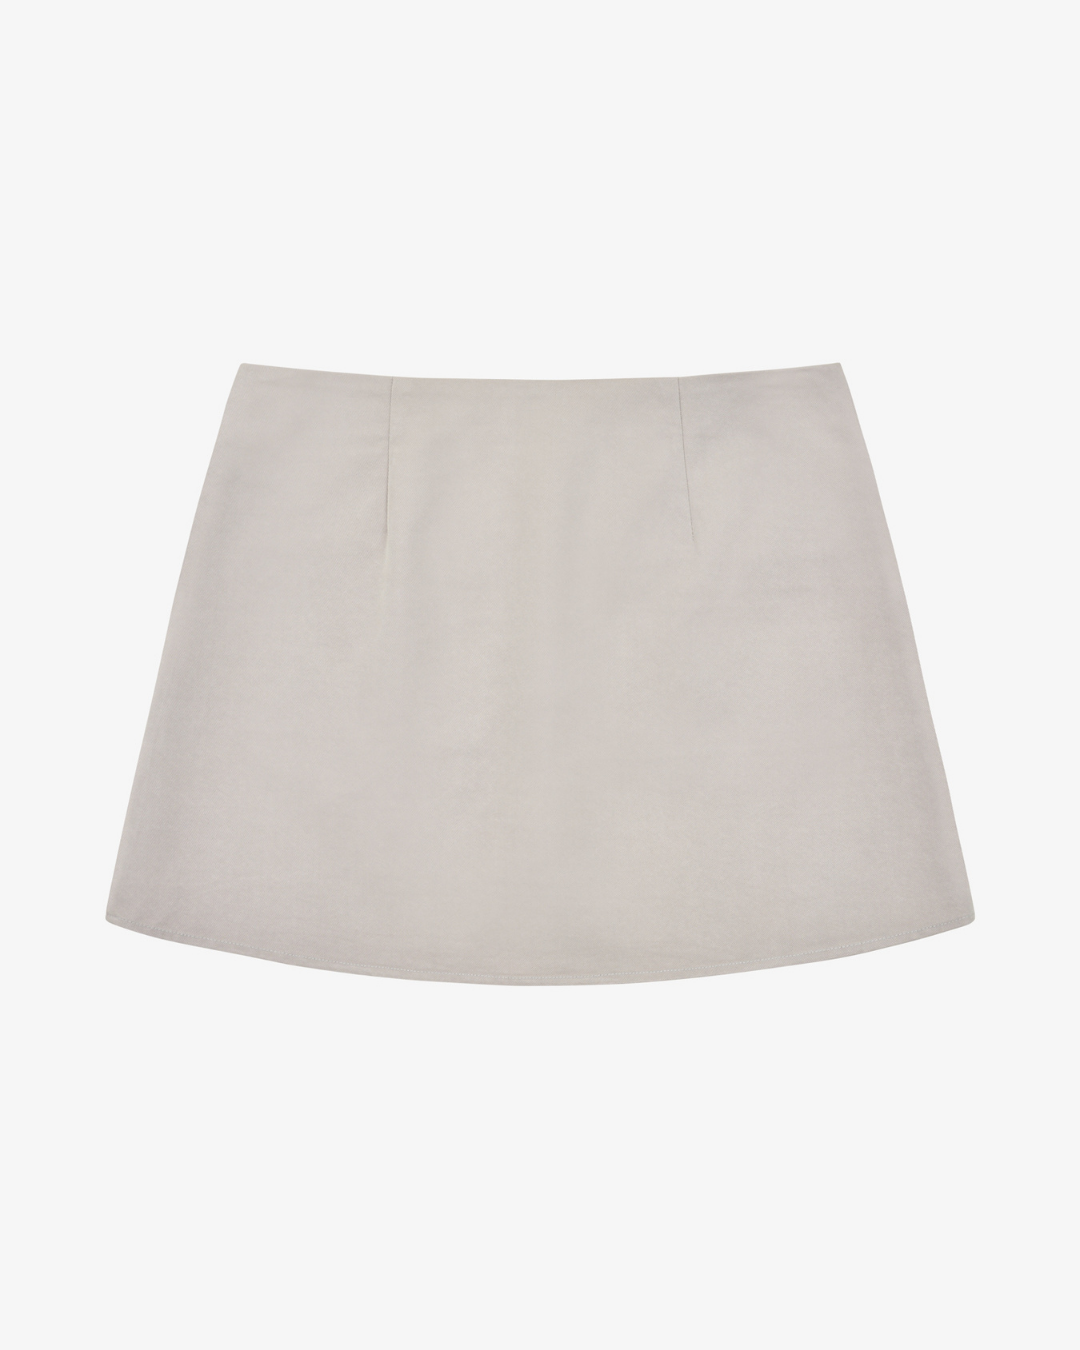 Women's Mini Skirt - Grey